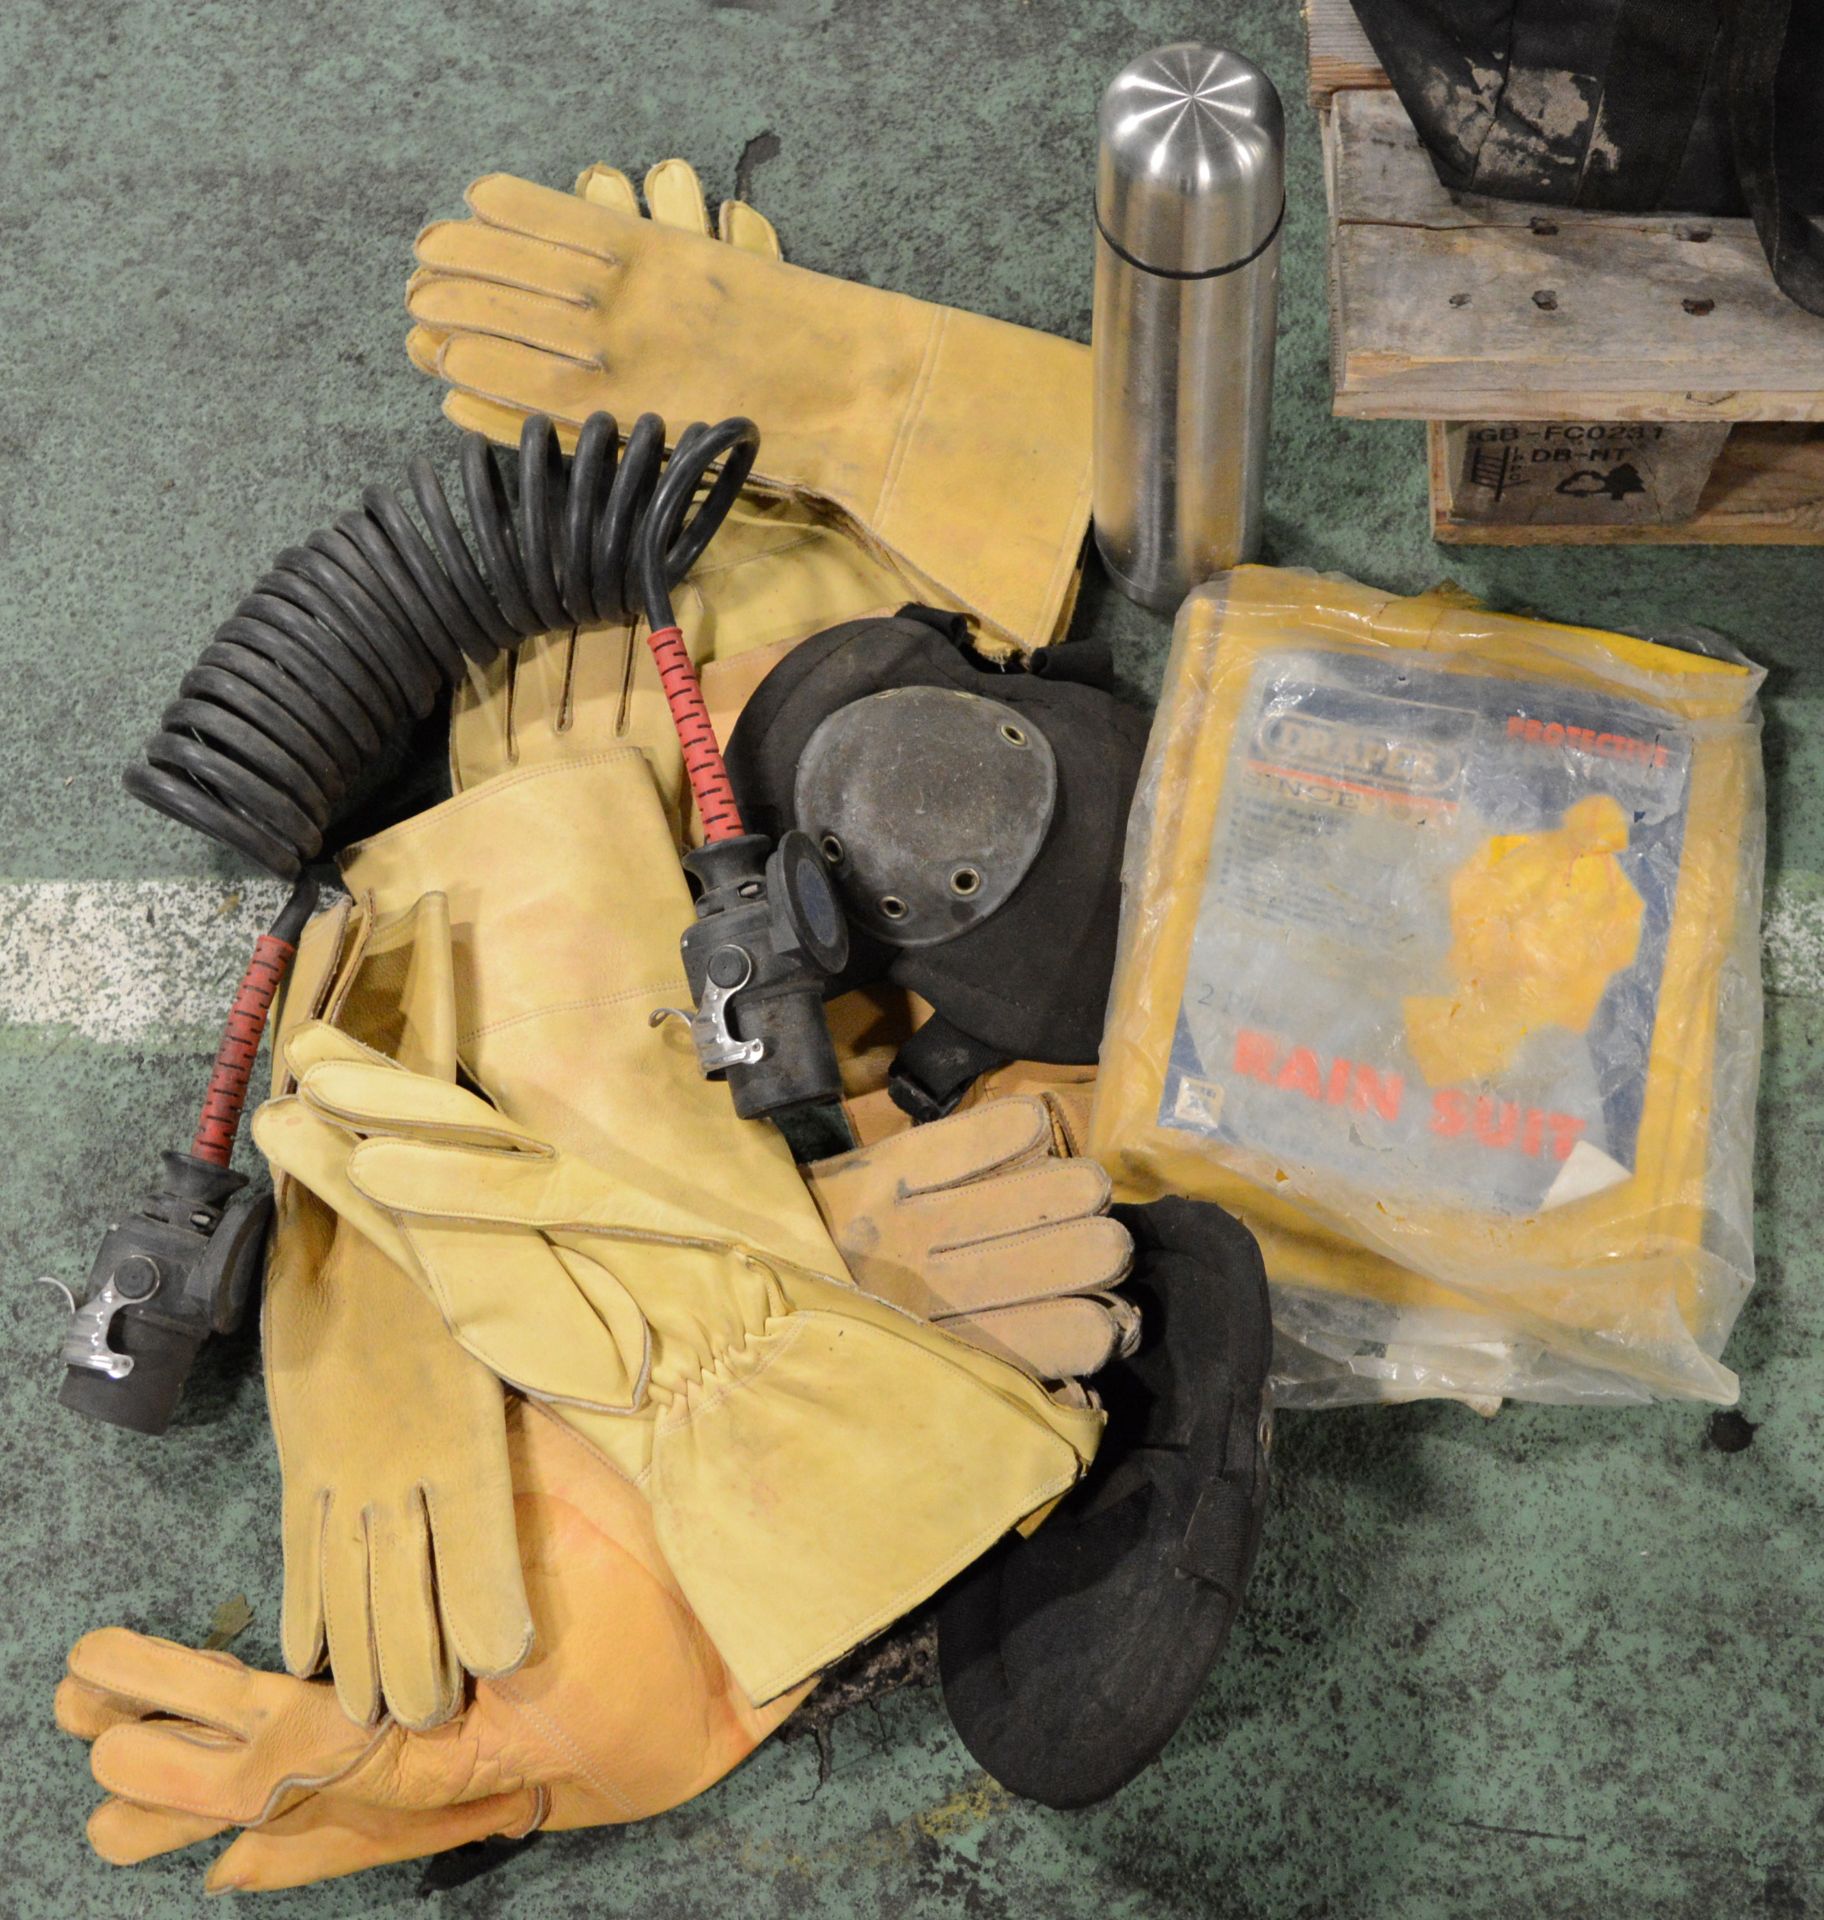 Job Lot inc Leather Gloves, SUZI NGU Connector, Draper Rain Suit, Vacuum Flask, Knee Prote - Image 2 of 2